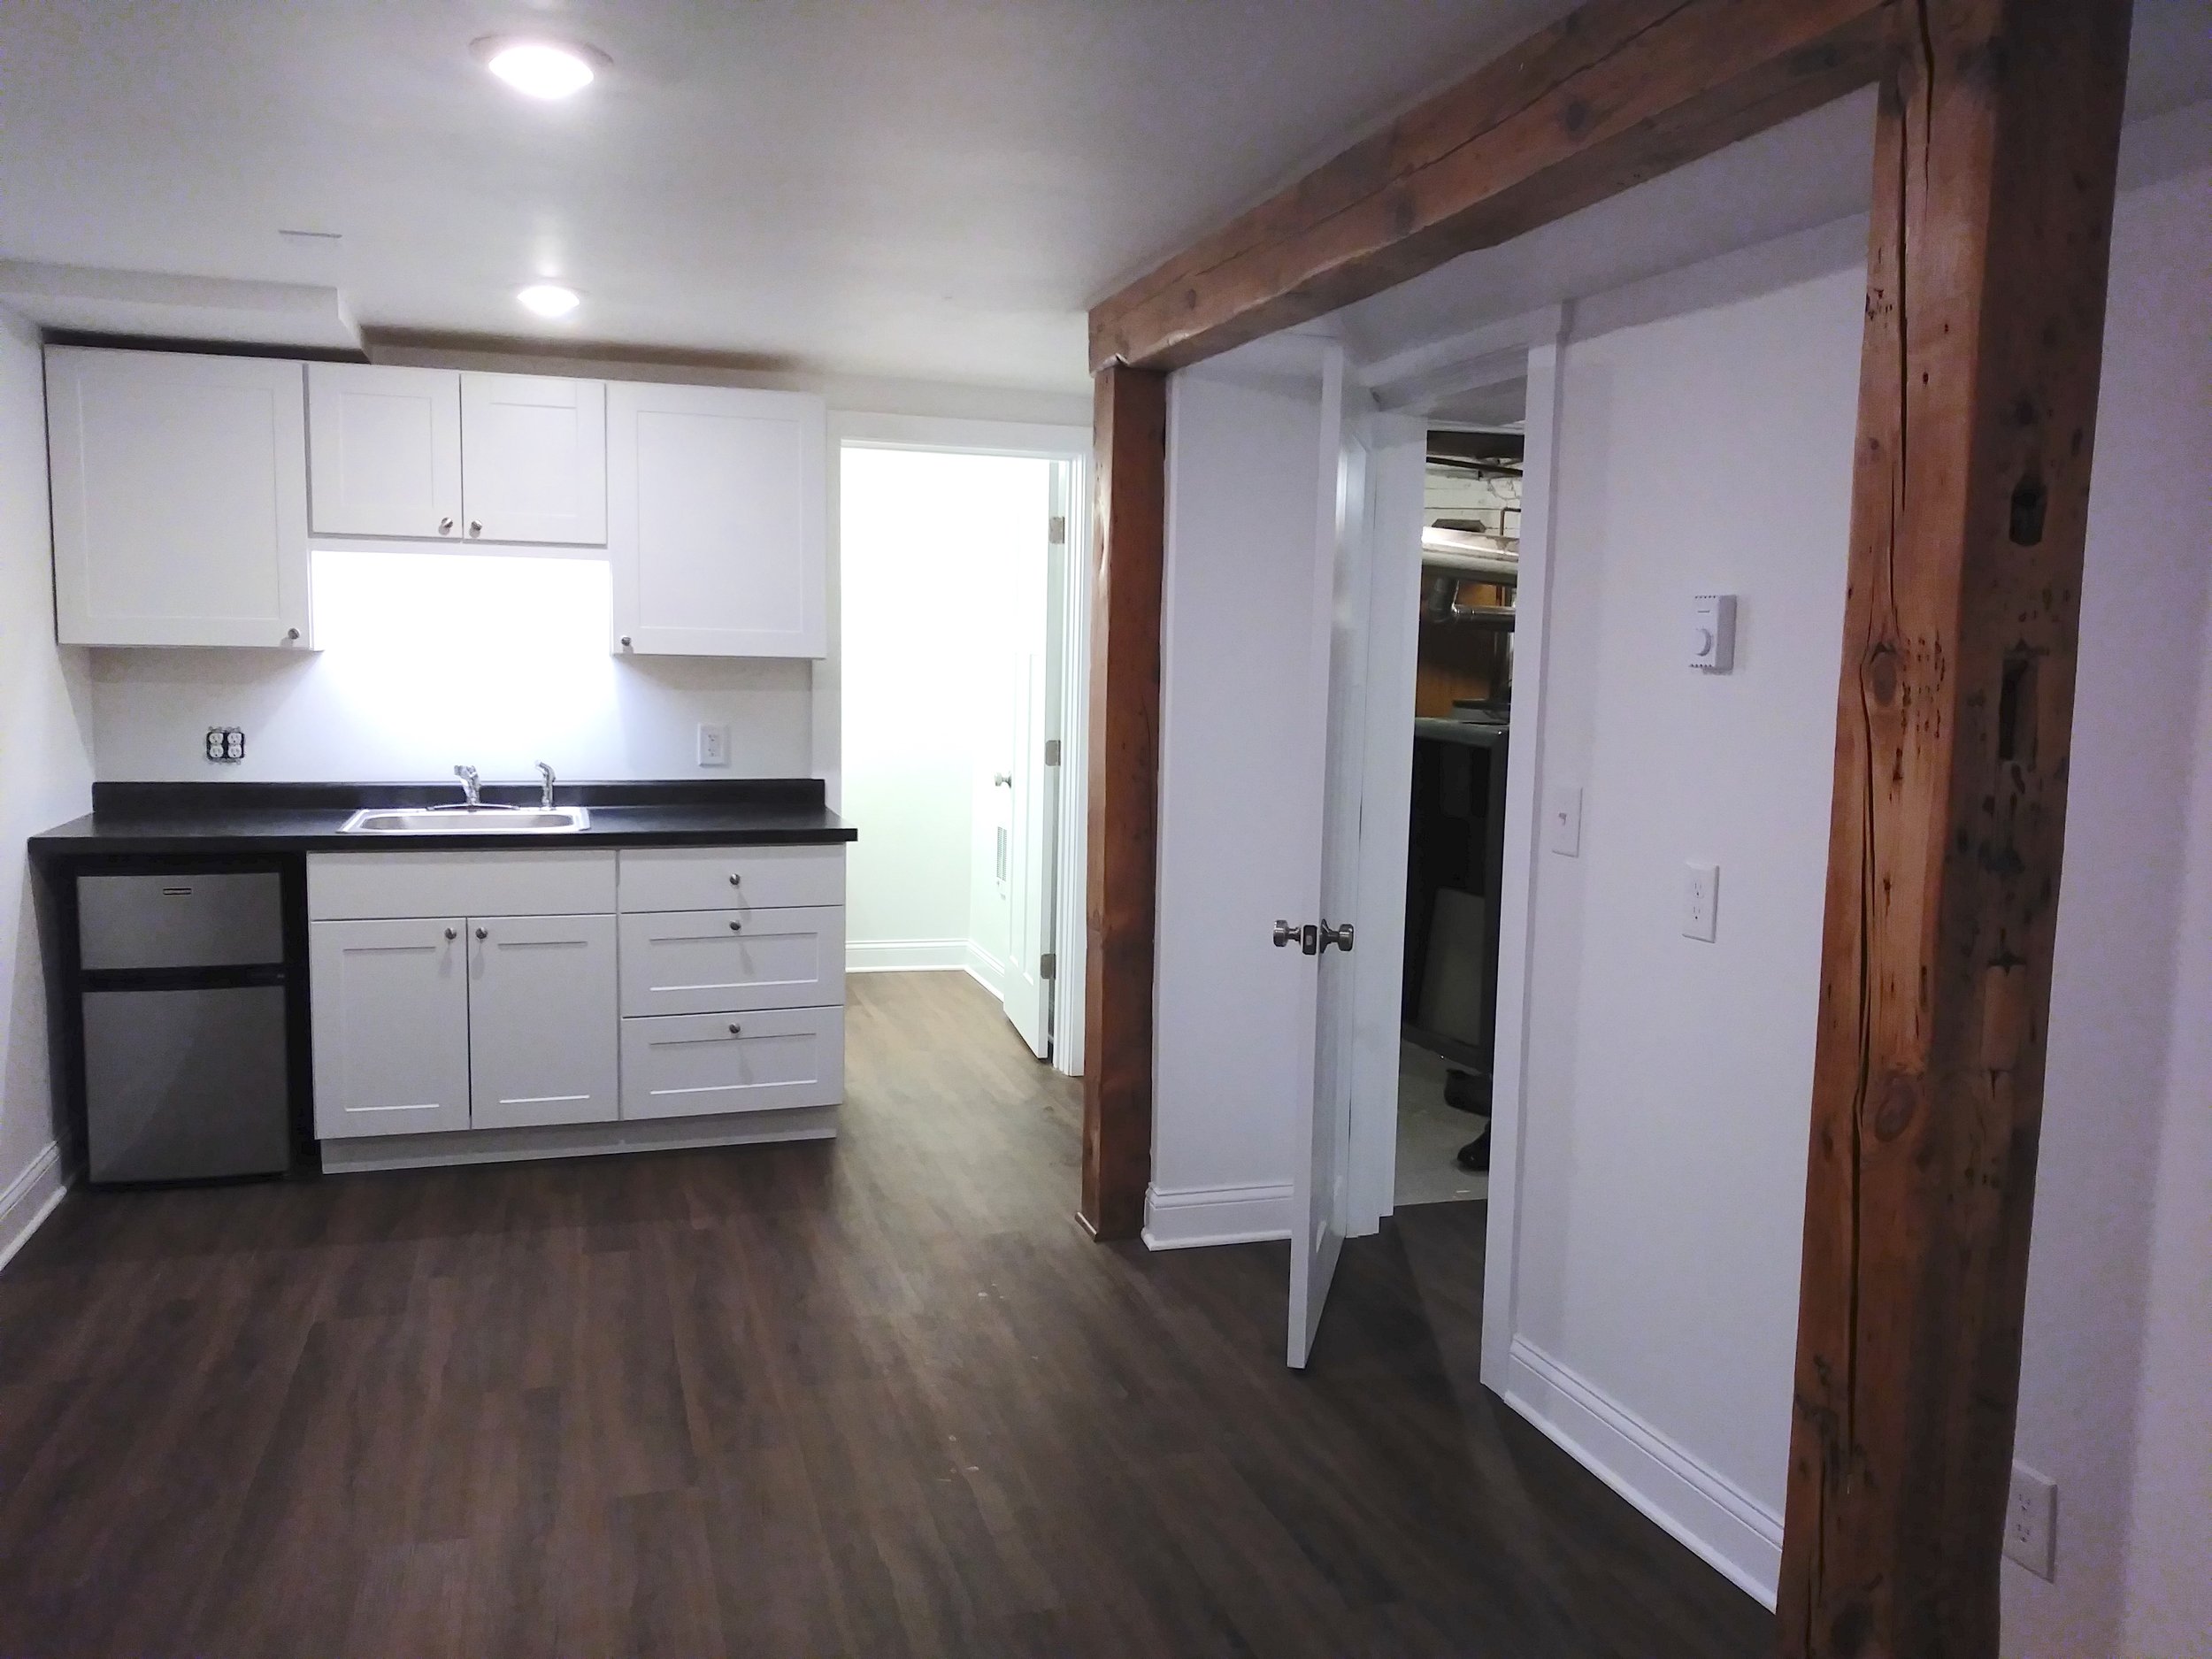 Basement apartment kitchen